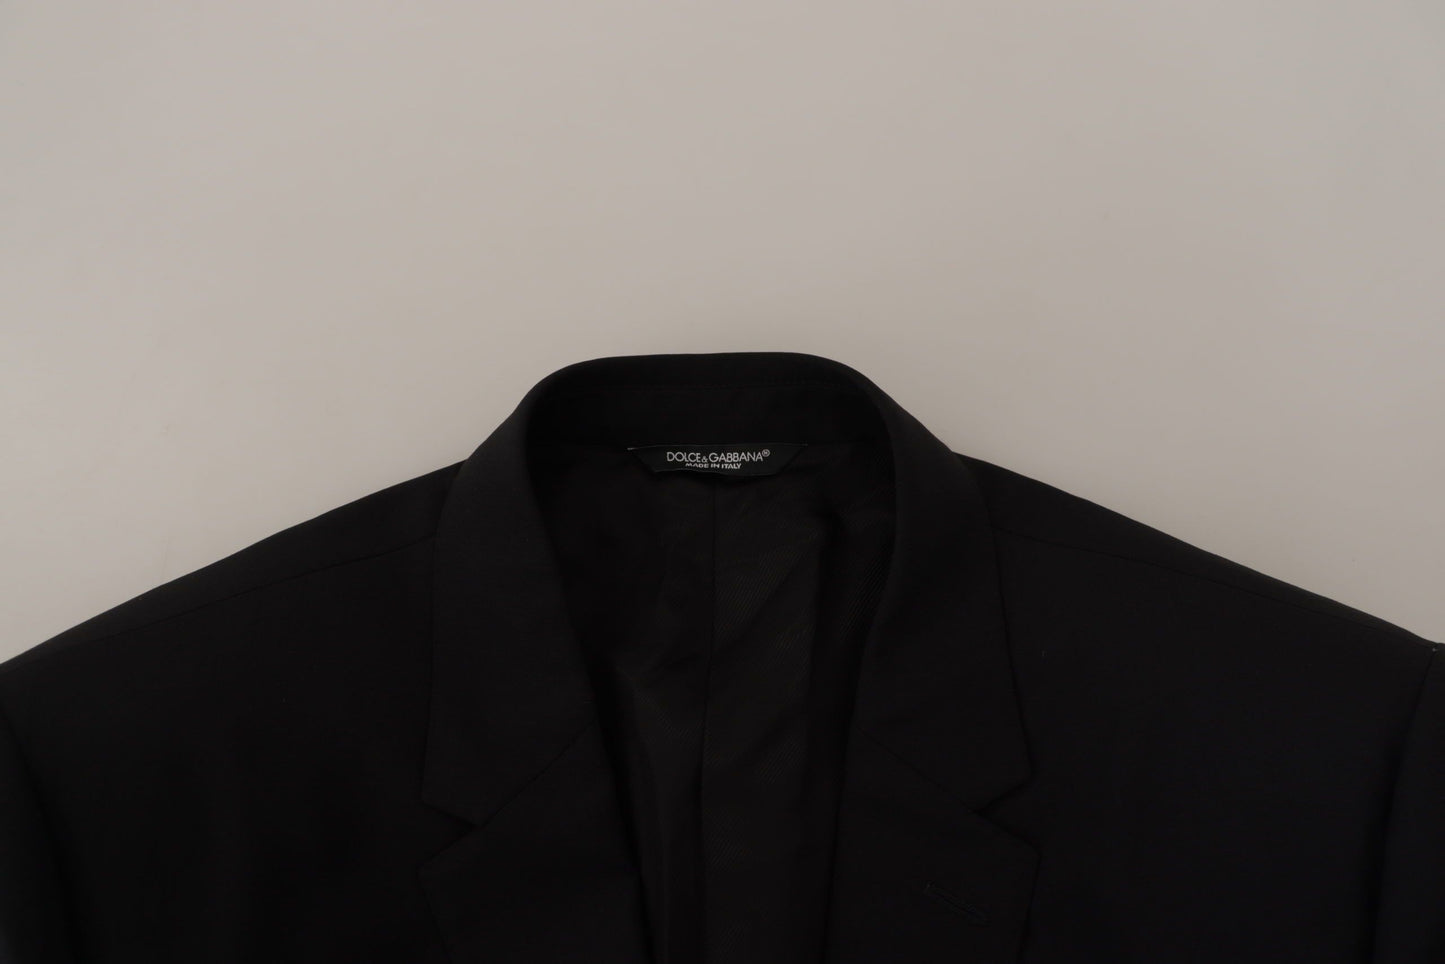 Elegant Black Three Piece Wool Suit